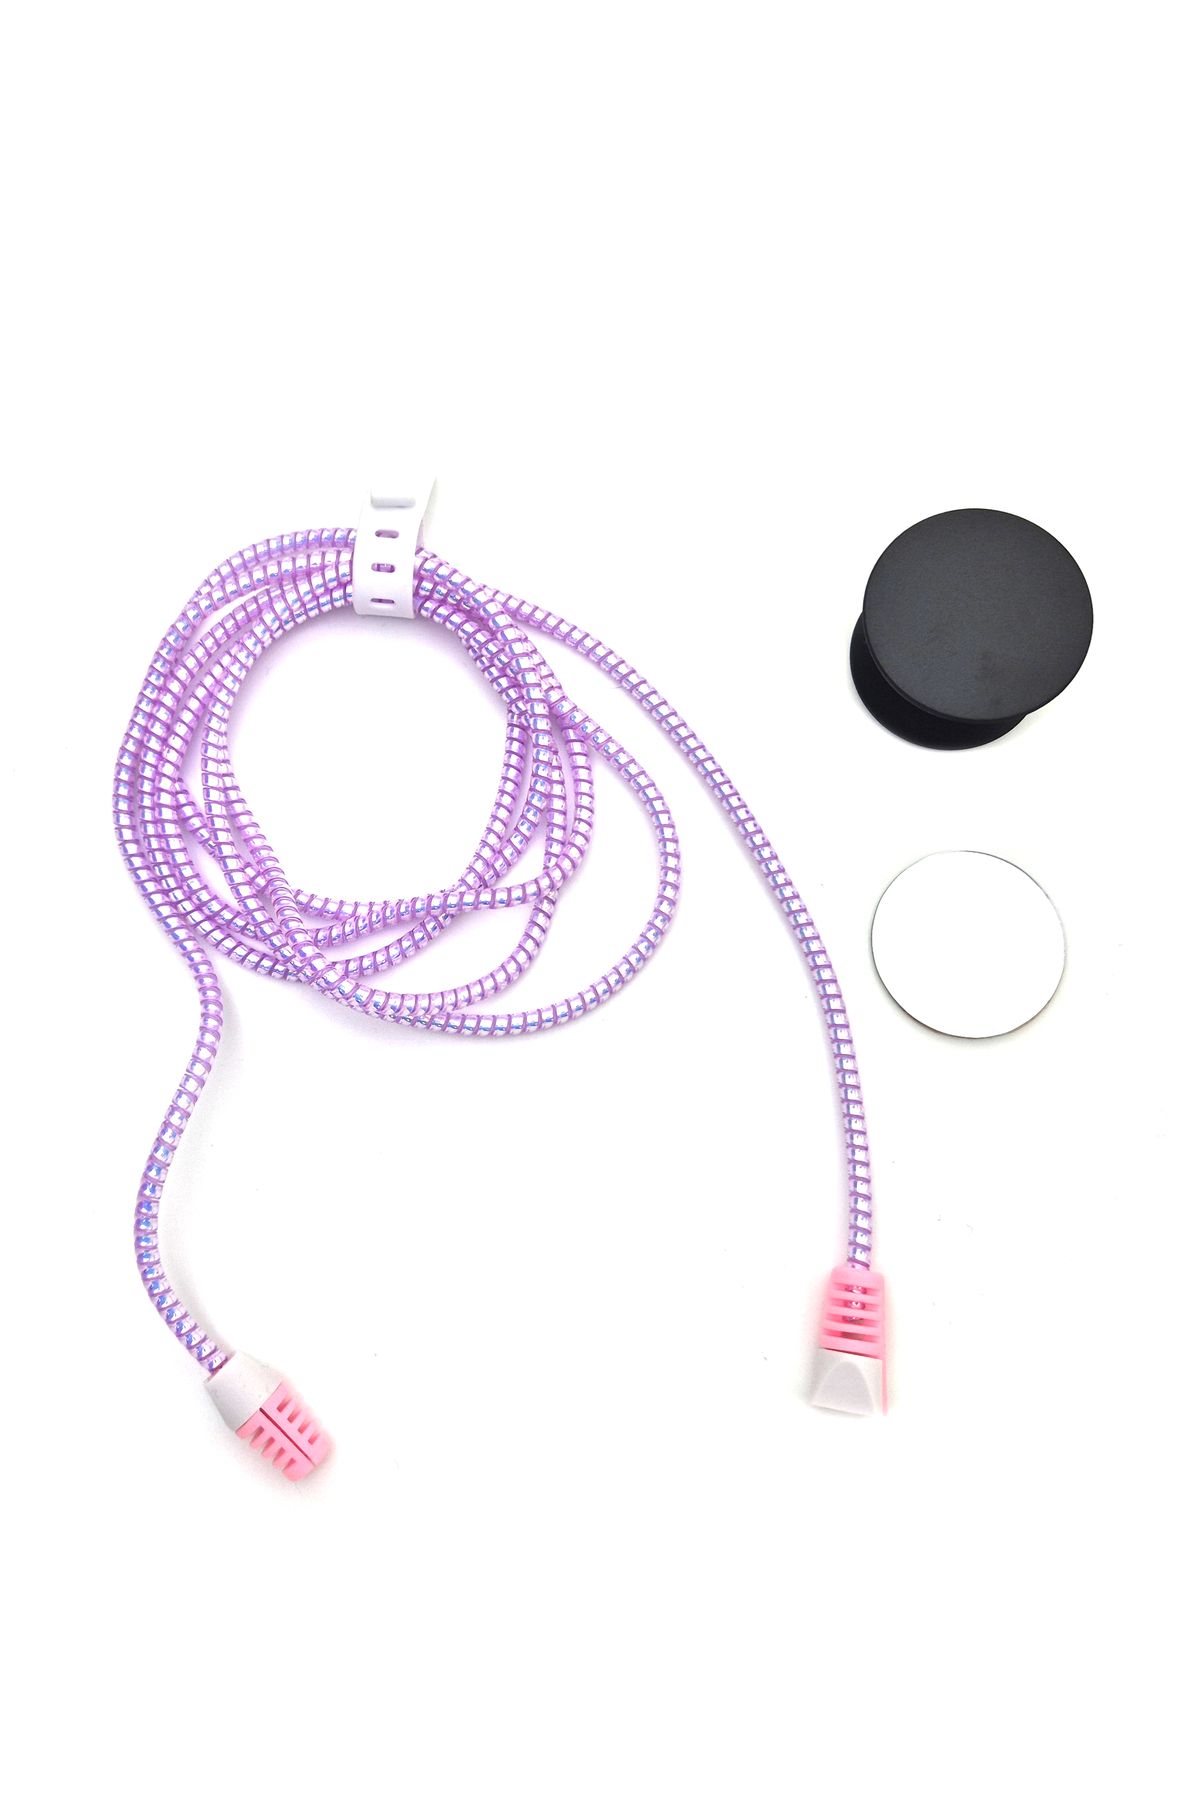 Spelt Tüm Kablolara Uyumlu Laser Pink Kablo Koruyucu Spiral Kemer Telefon Tutucu Soket Ayna Körük Se